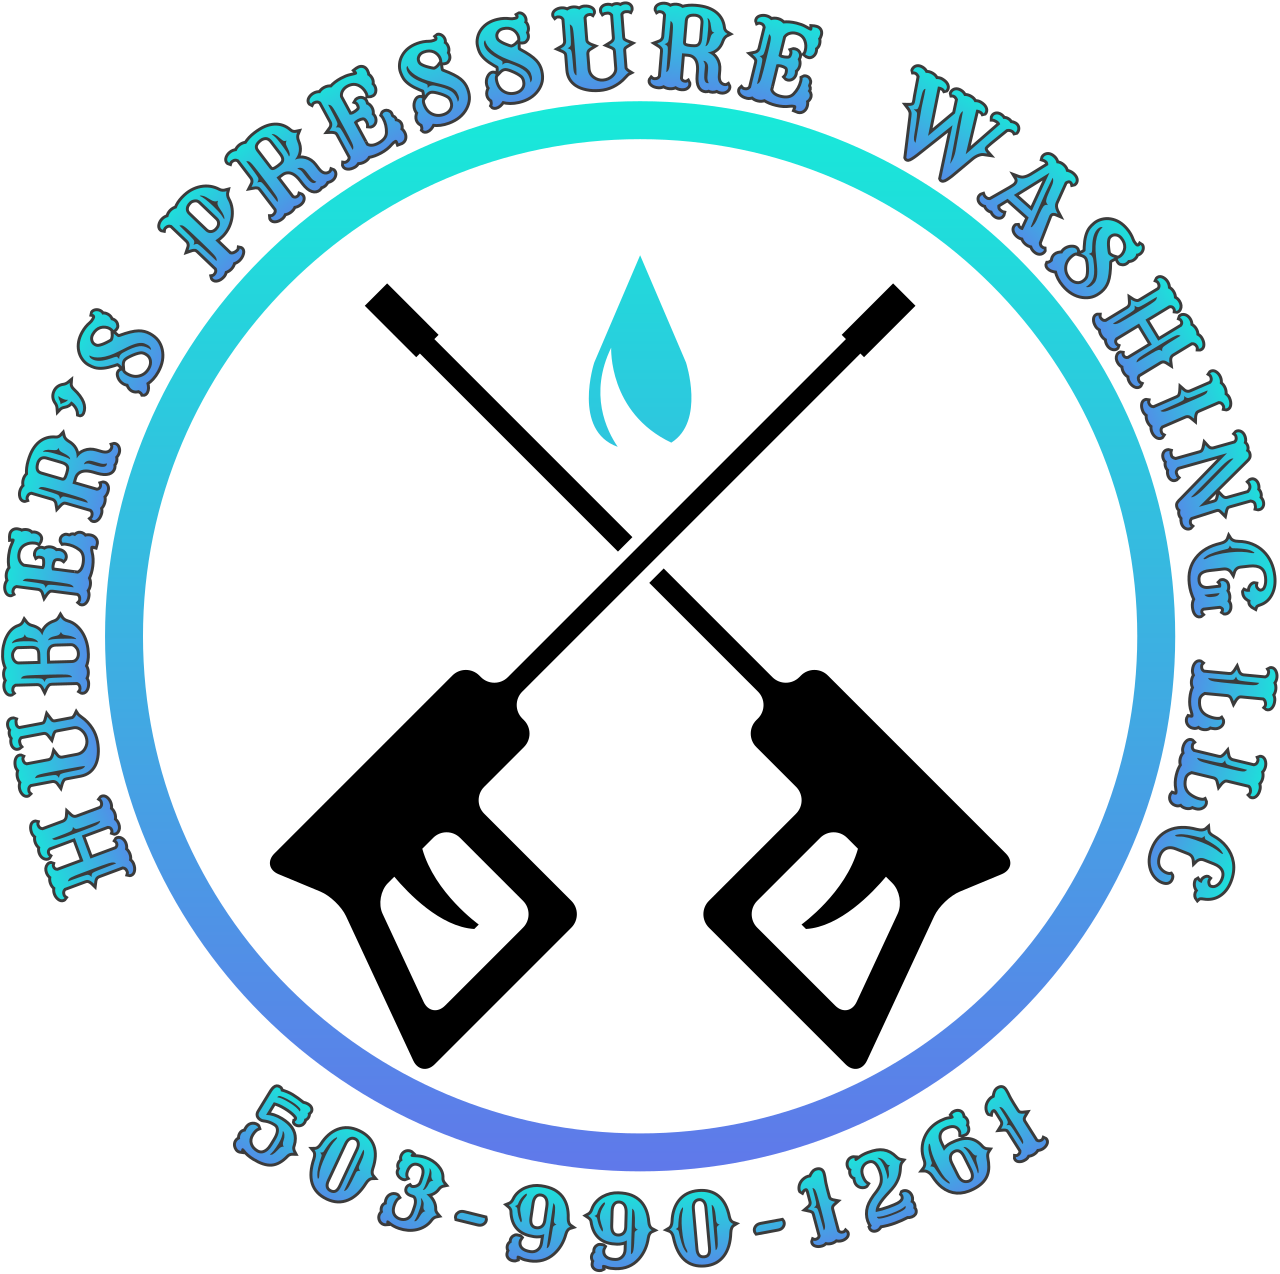 HUBER’S  PRESSURE  WASHING LLC's logo